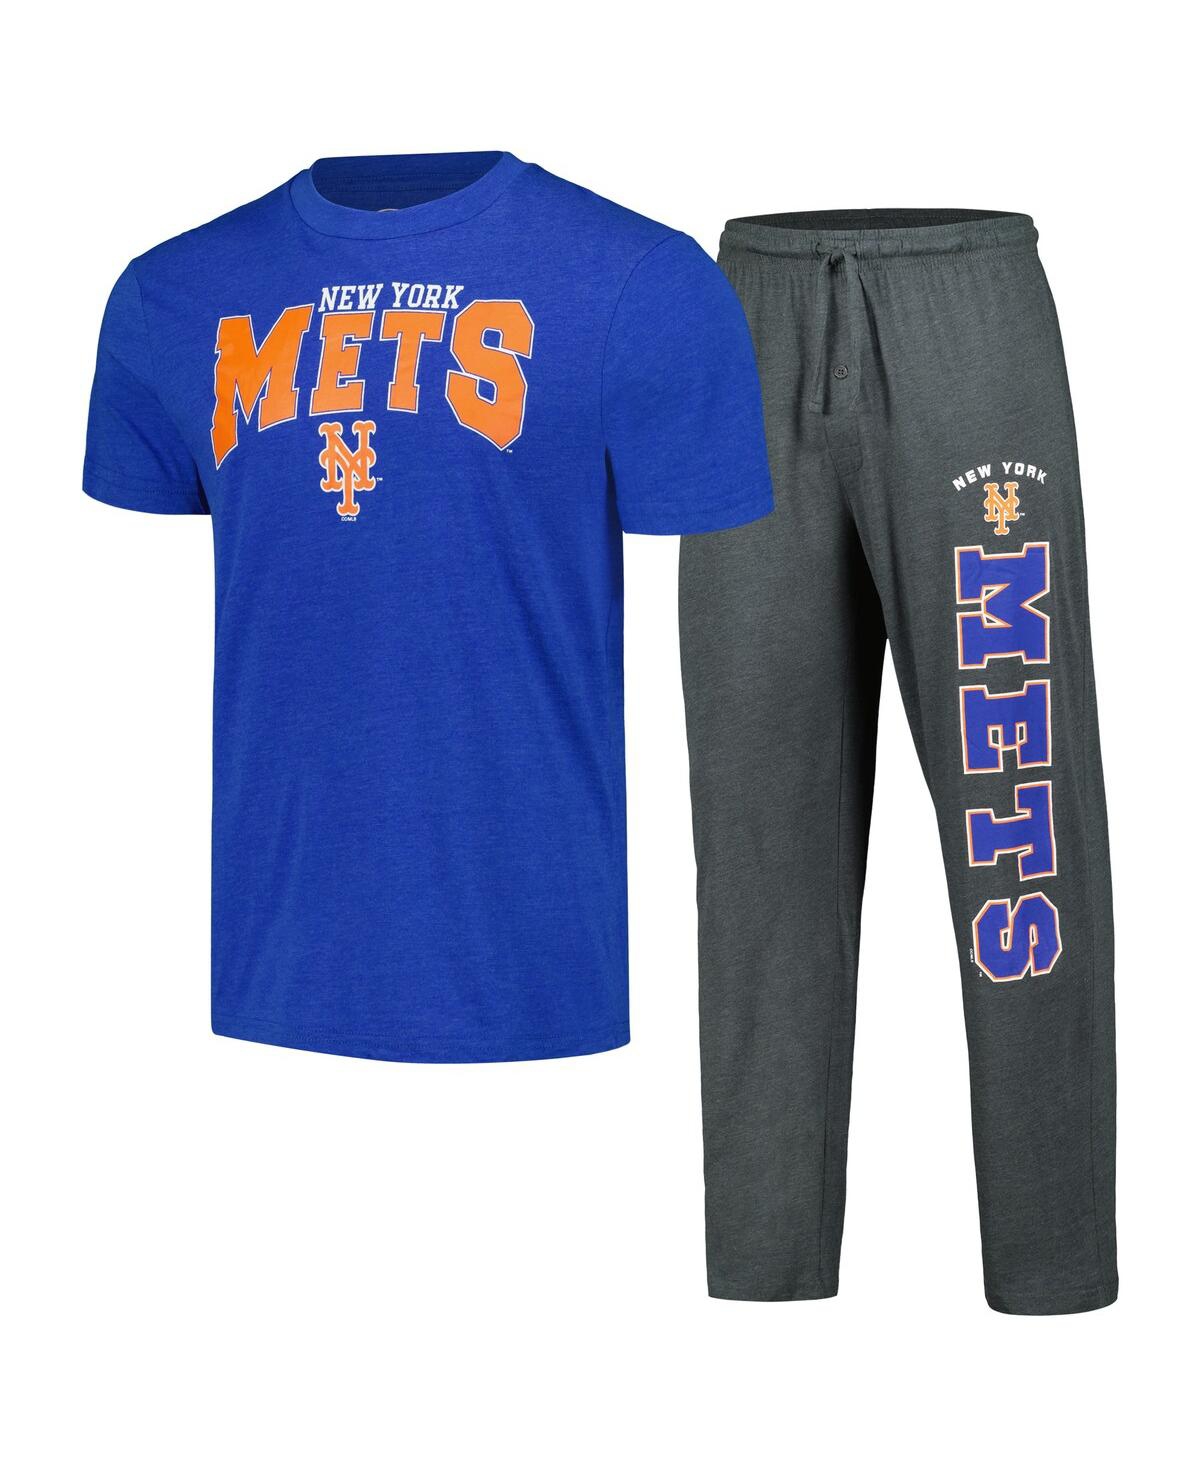 Men's Concepts Sport Charcoal, Royal New York Mets Meter T-shirt and Pants Sleep Set - Charcoal, Royal